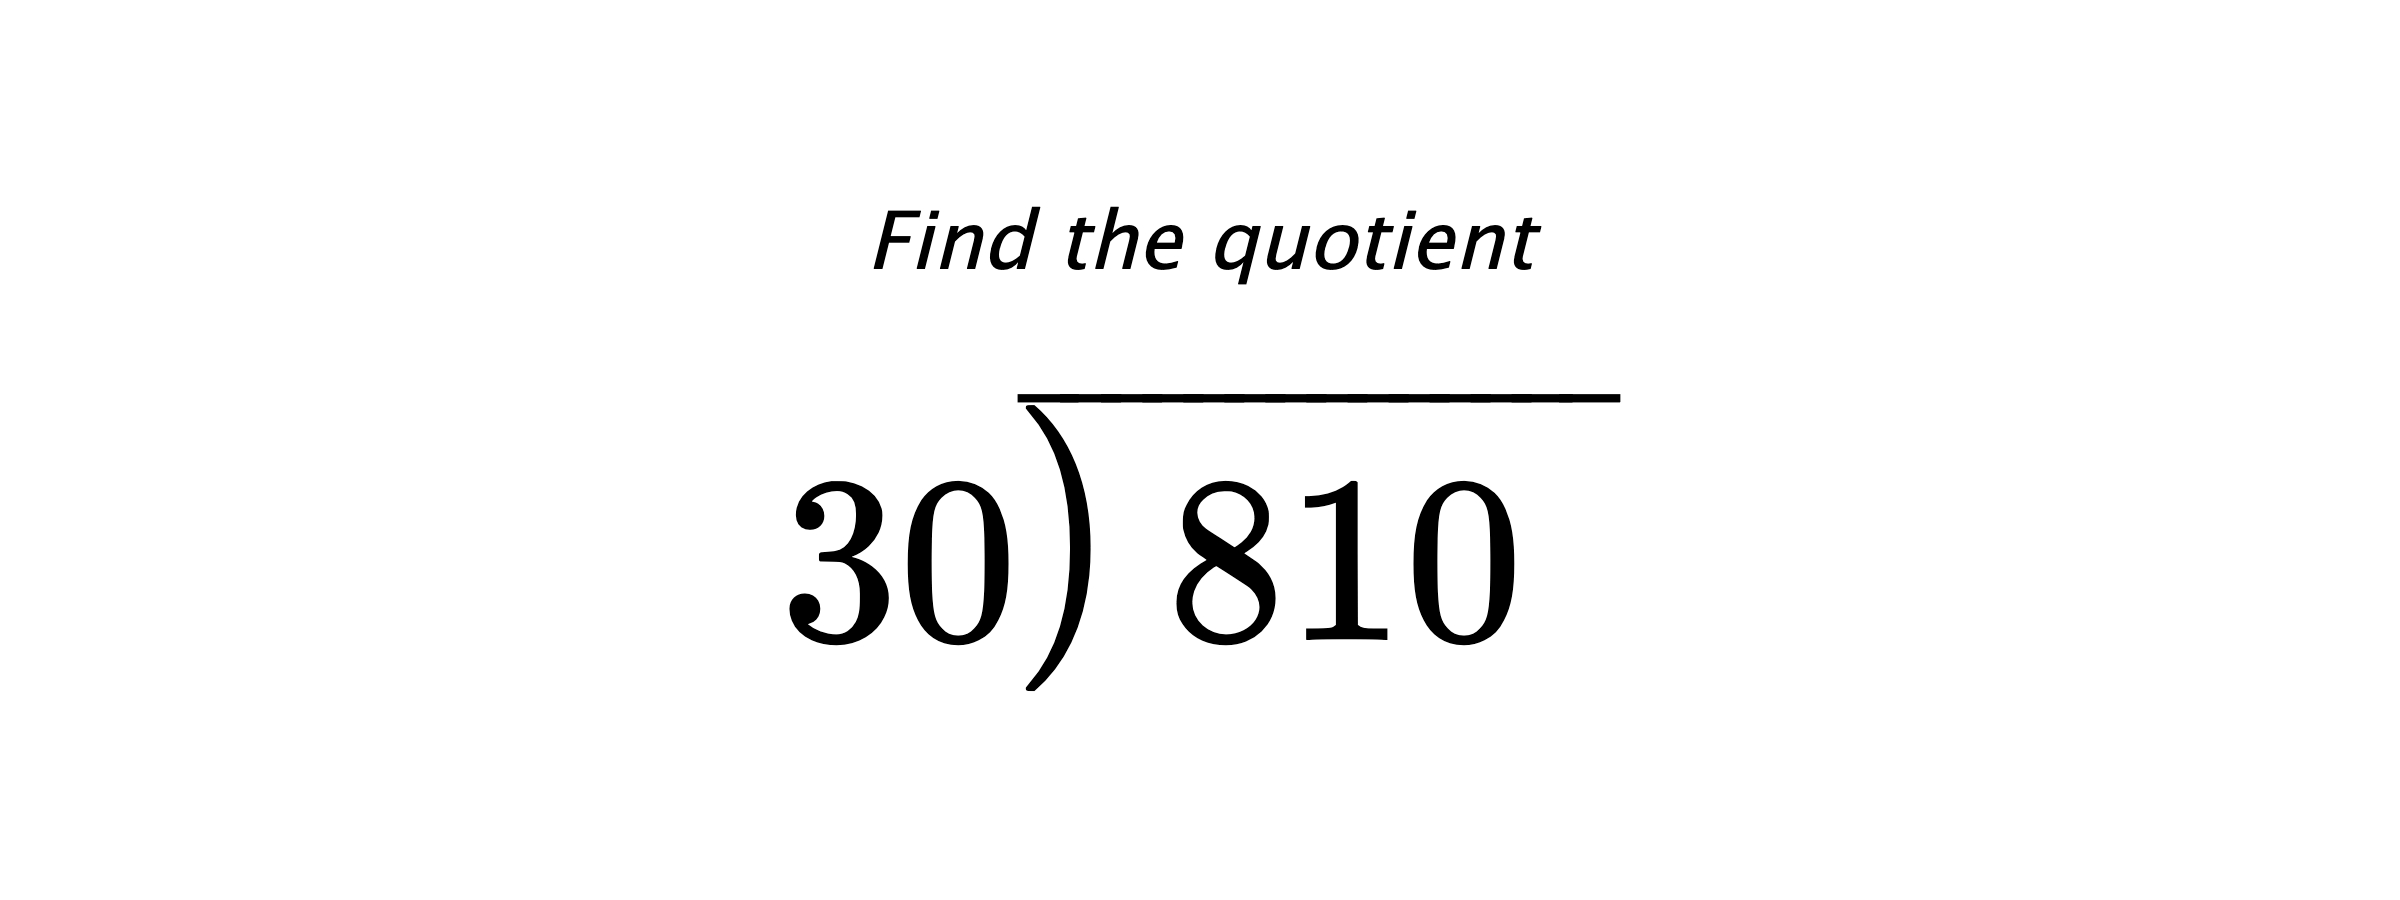 Find the quotient $ 30{\overline{\smash{\raise.3ex\hbox{$\big)$}}\,810\phantom{)}}} $